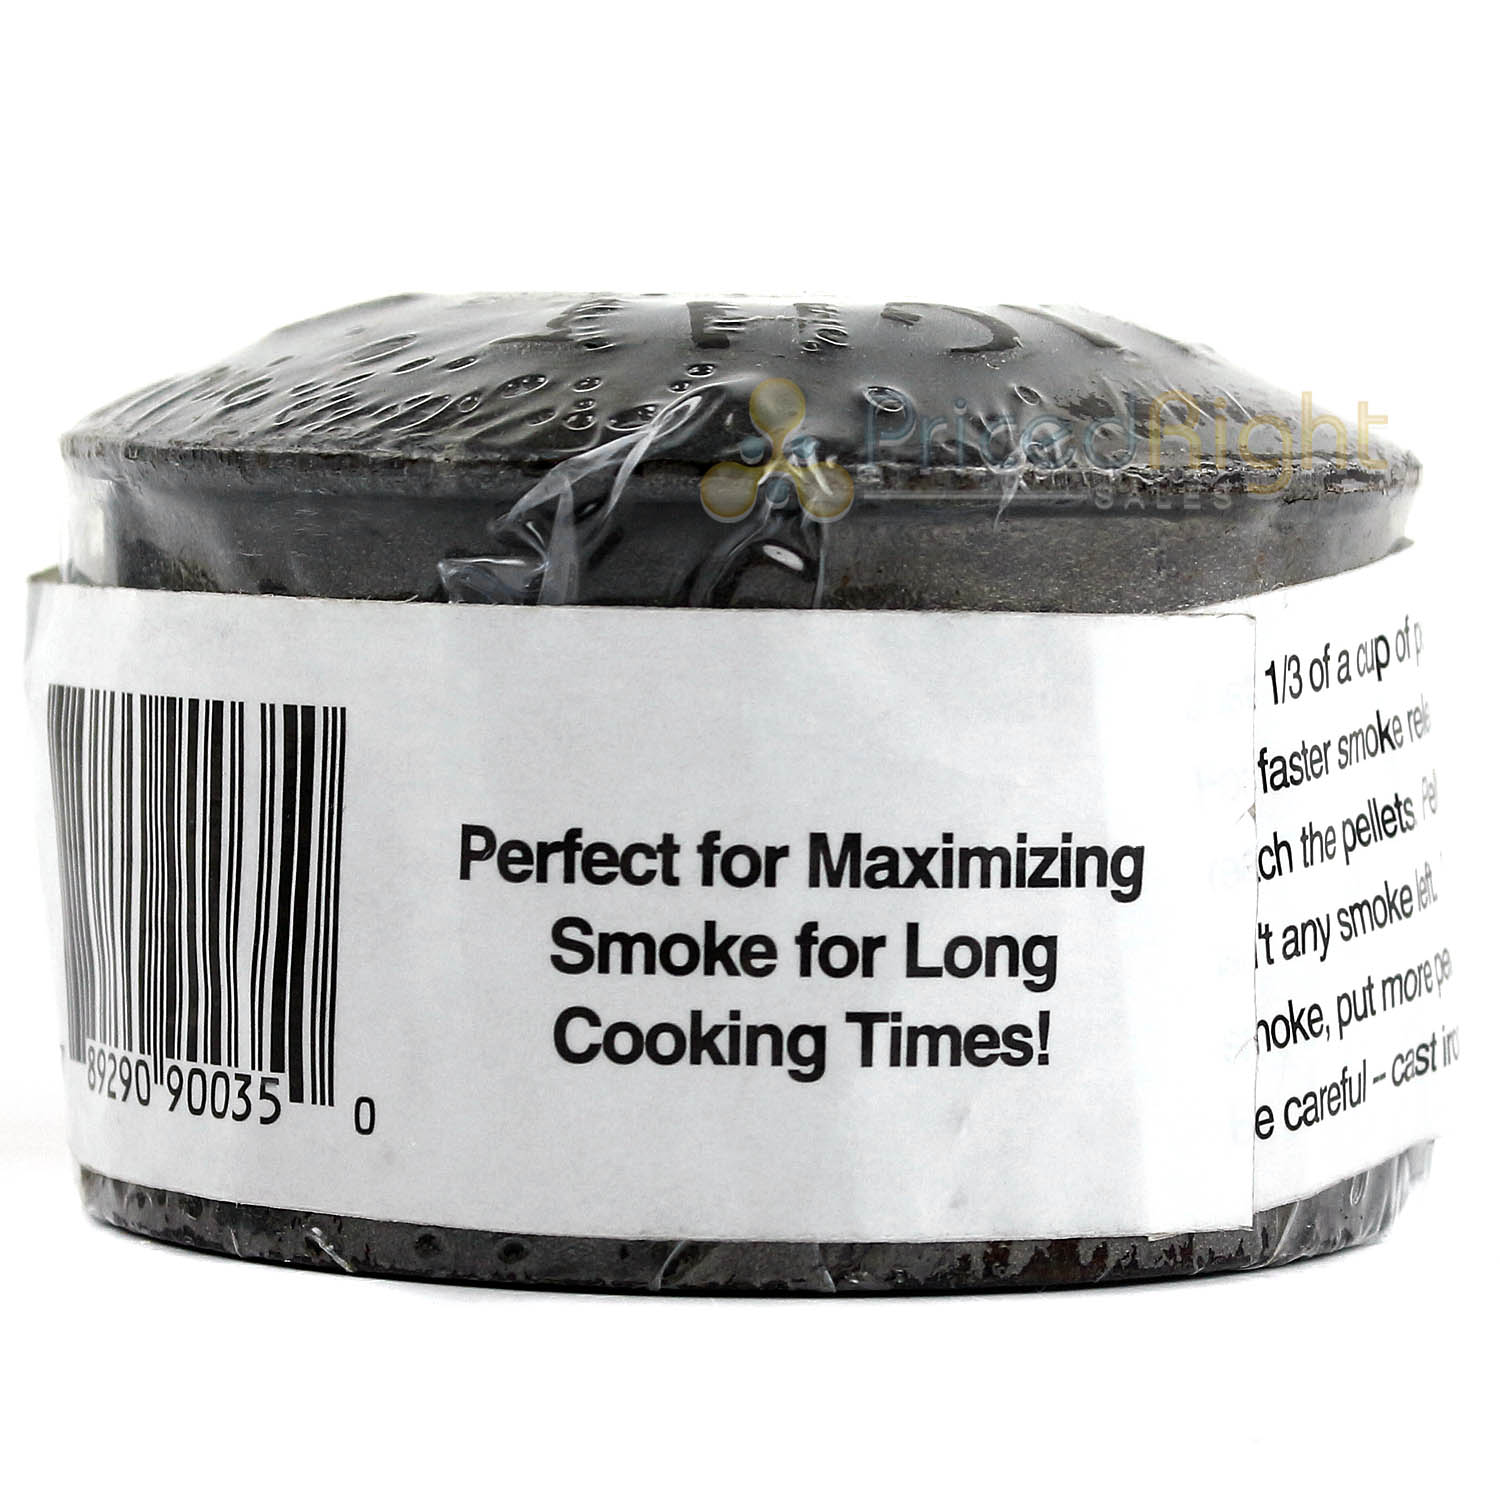 BBQr's Delight Cast Iron Smoker Pot Wood Pellet Smoke BBQ with 1lb Cherry Wood